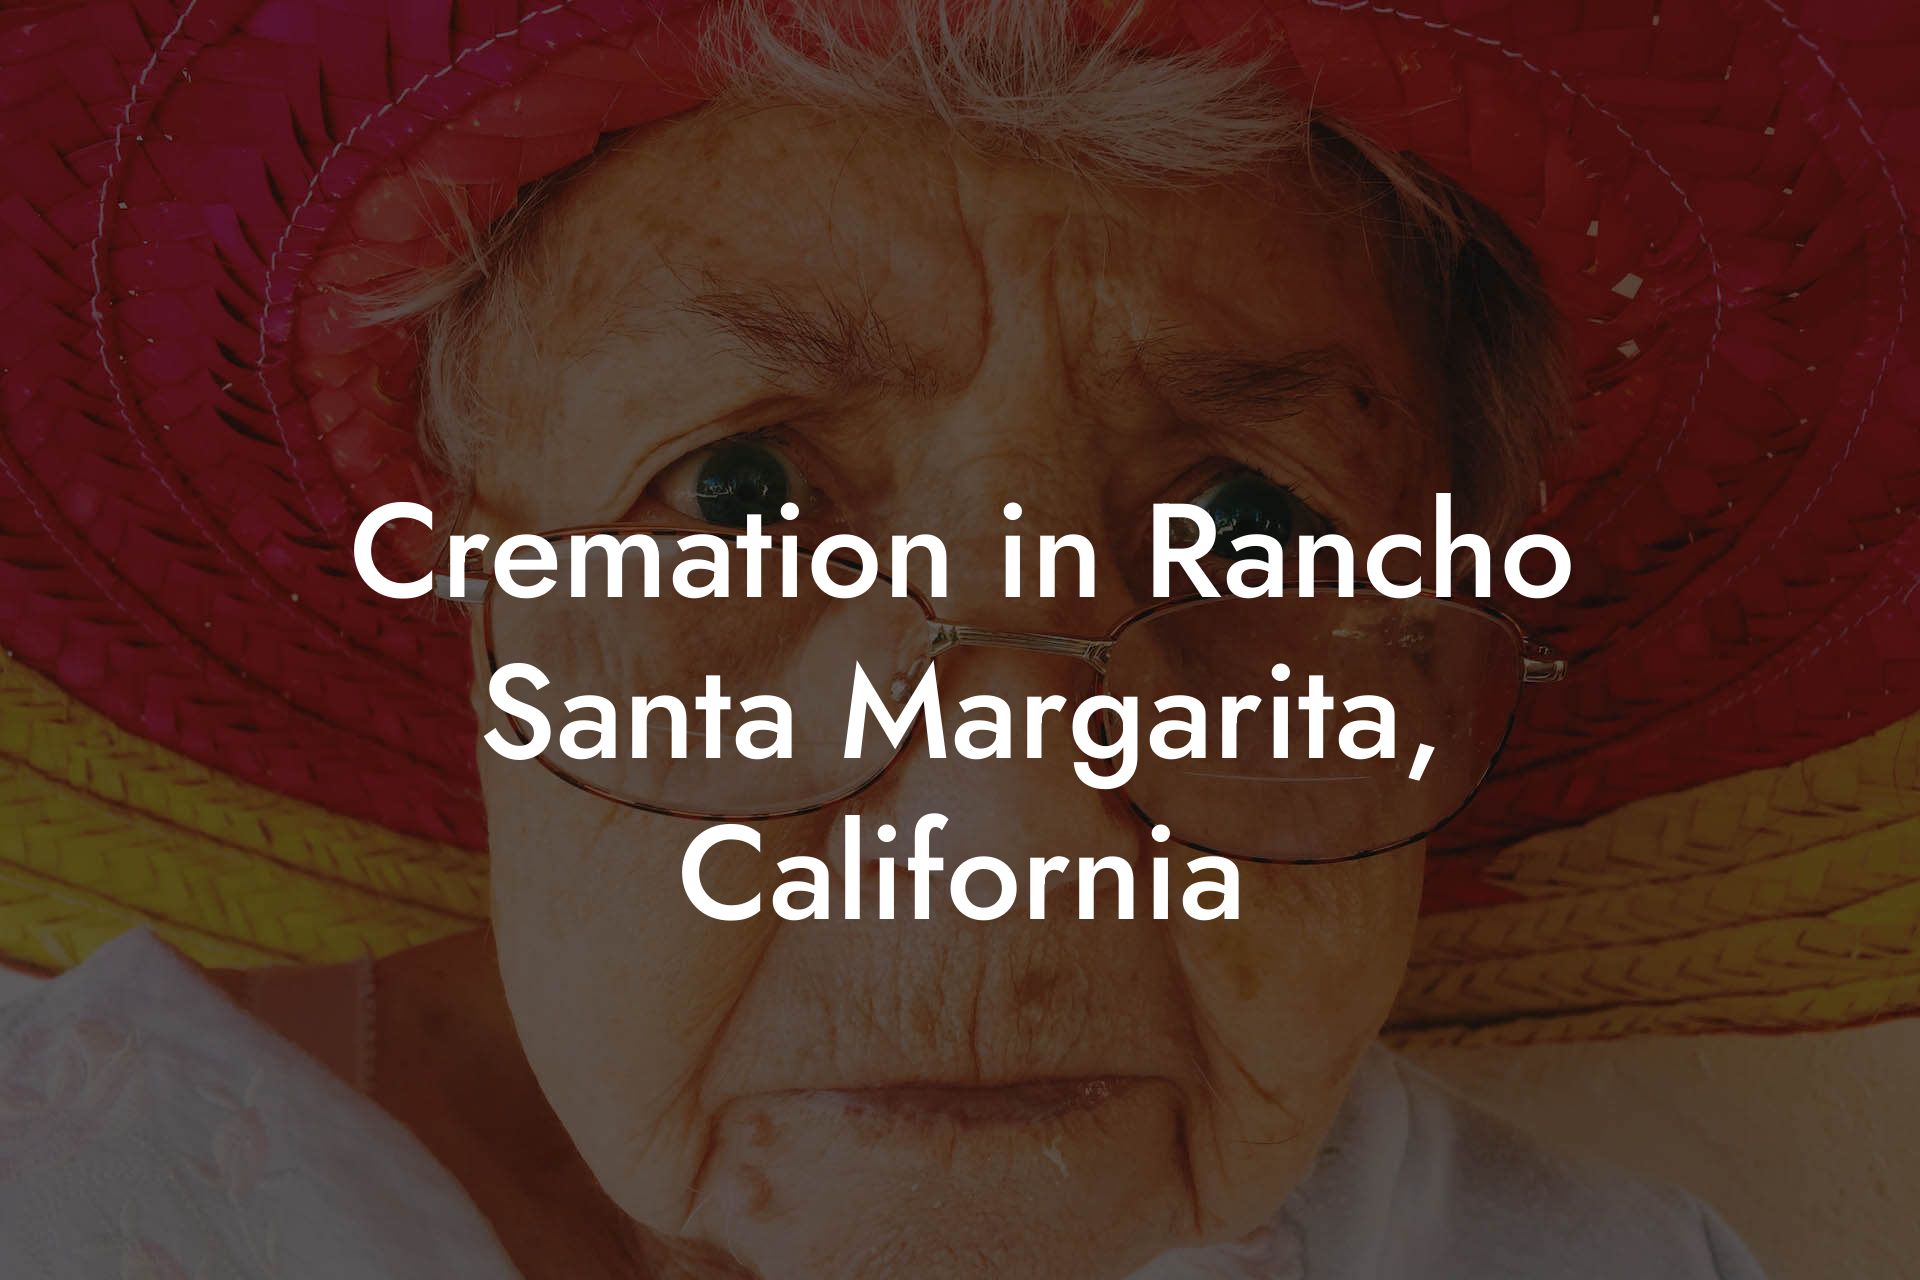 Cremation in Rancho Santa Margarita, California